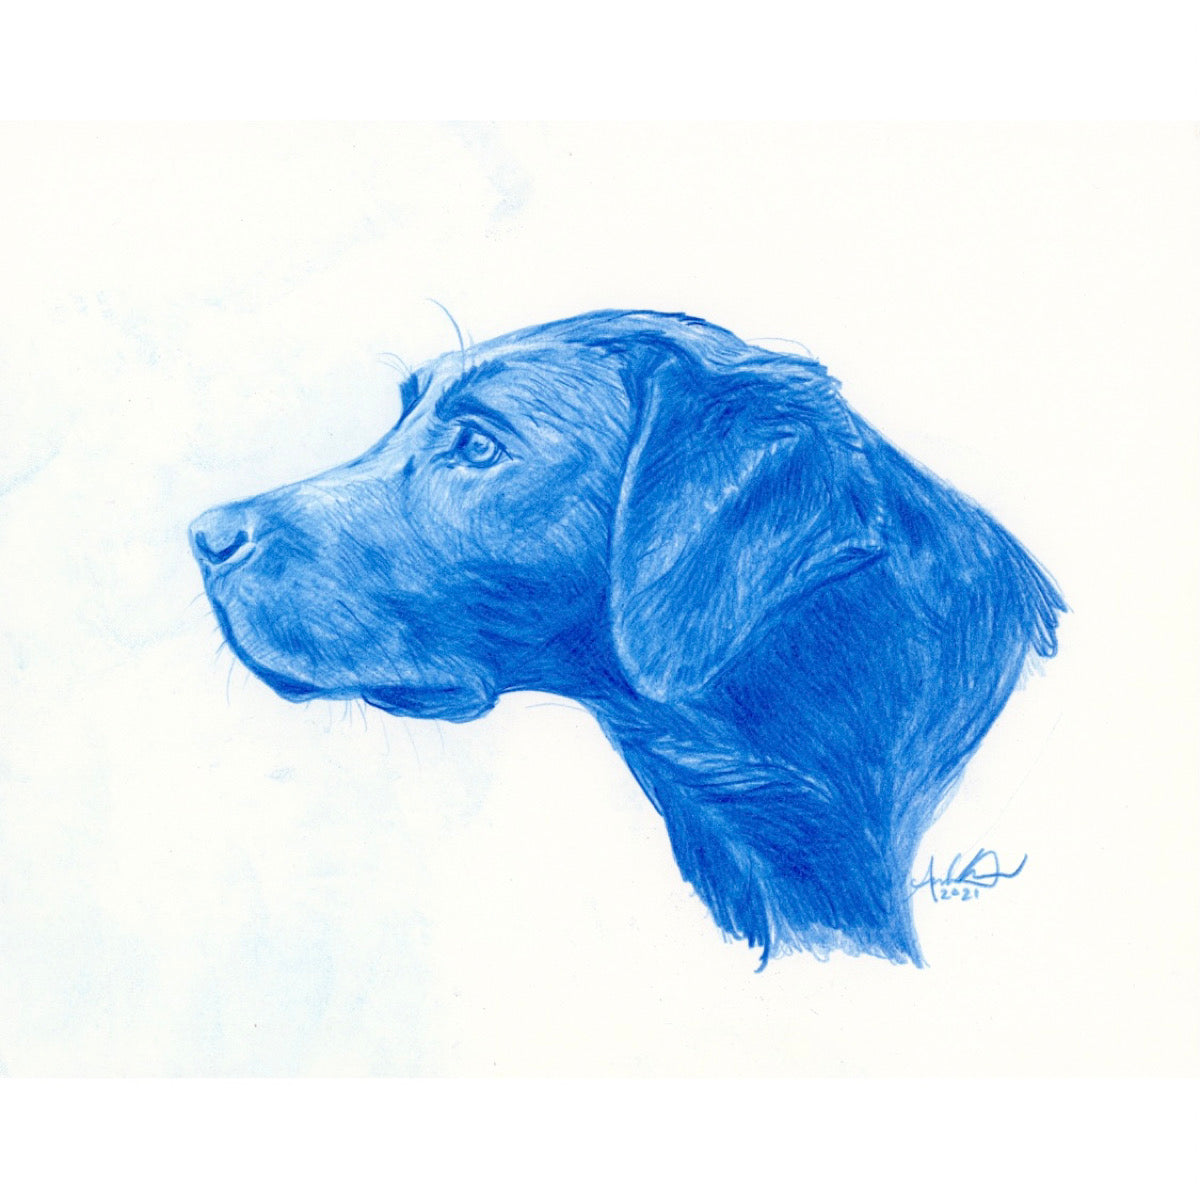 Black Labrador Profile in Blue, original 8x10”